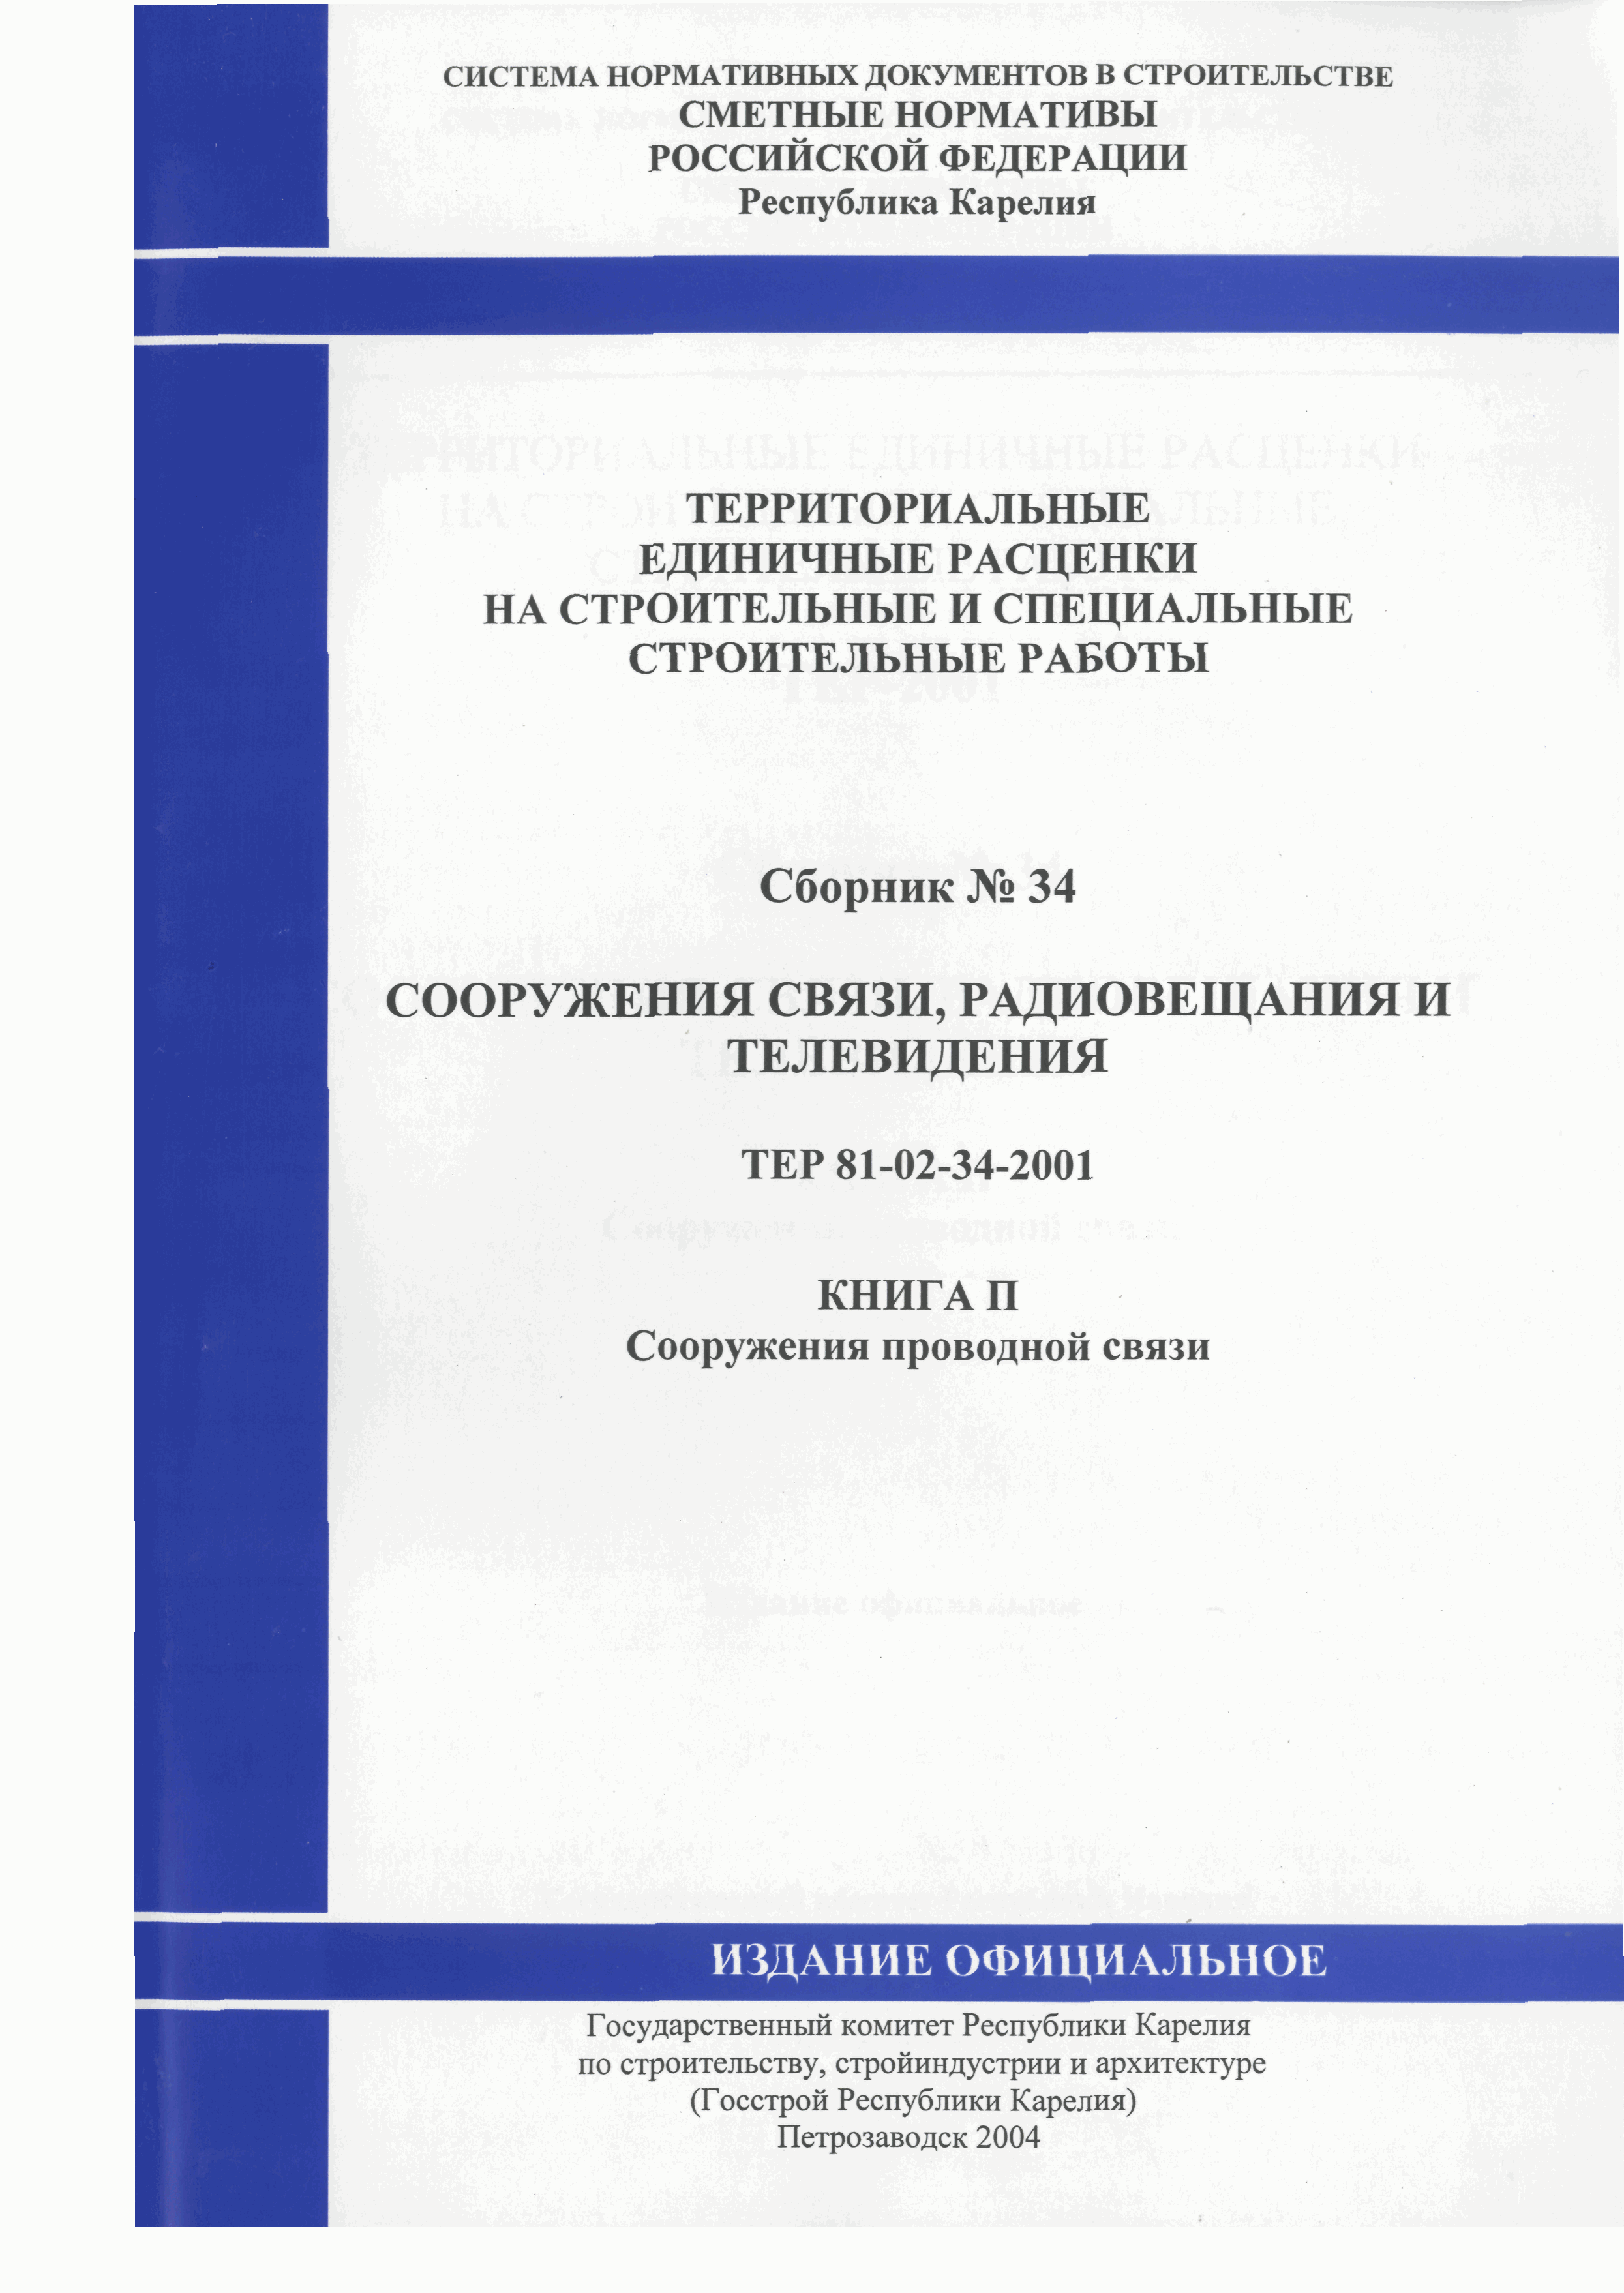 ТЕР Республика Карелия 2001-34